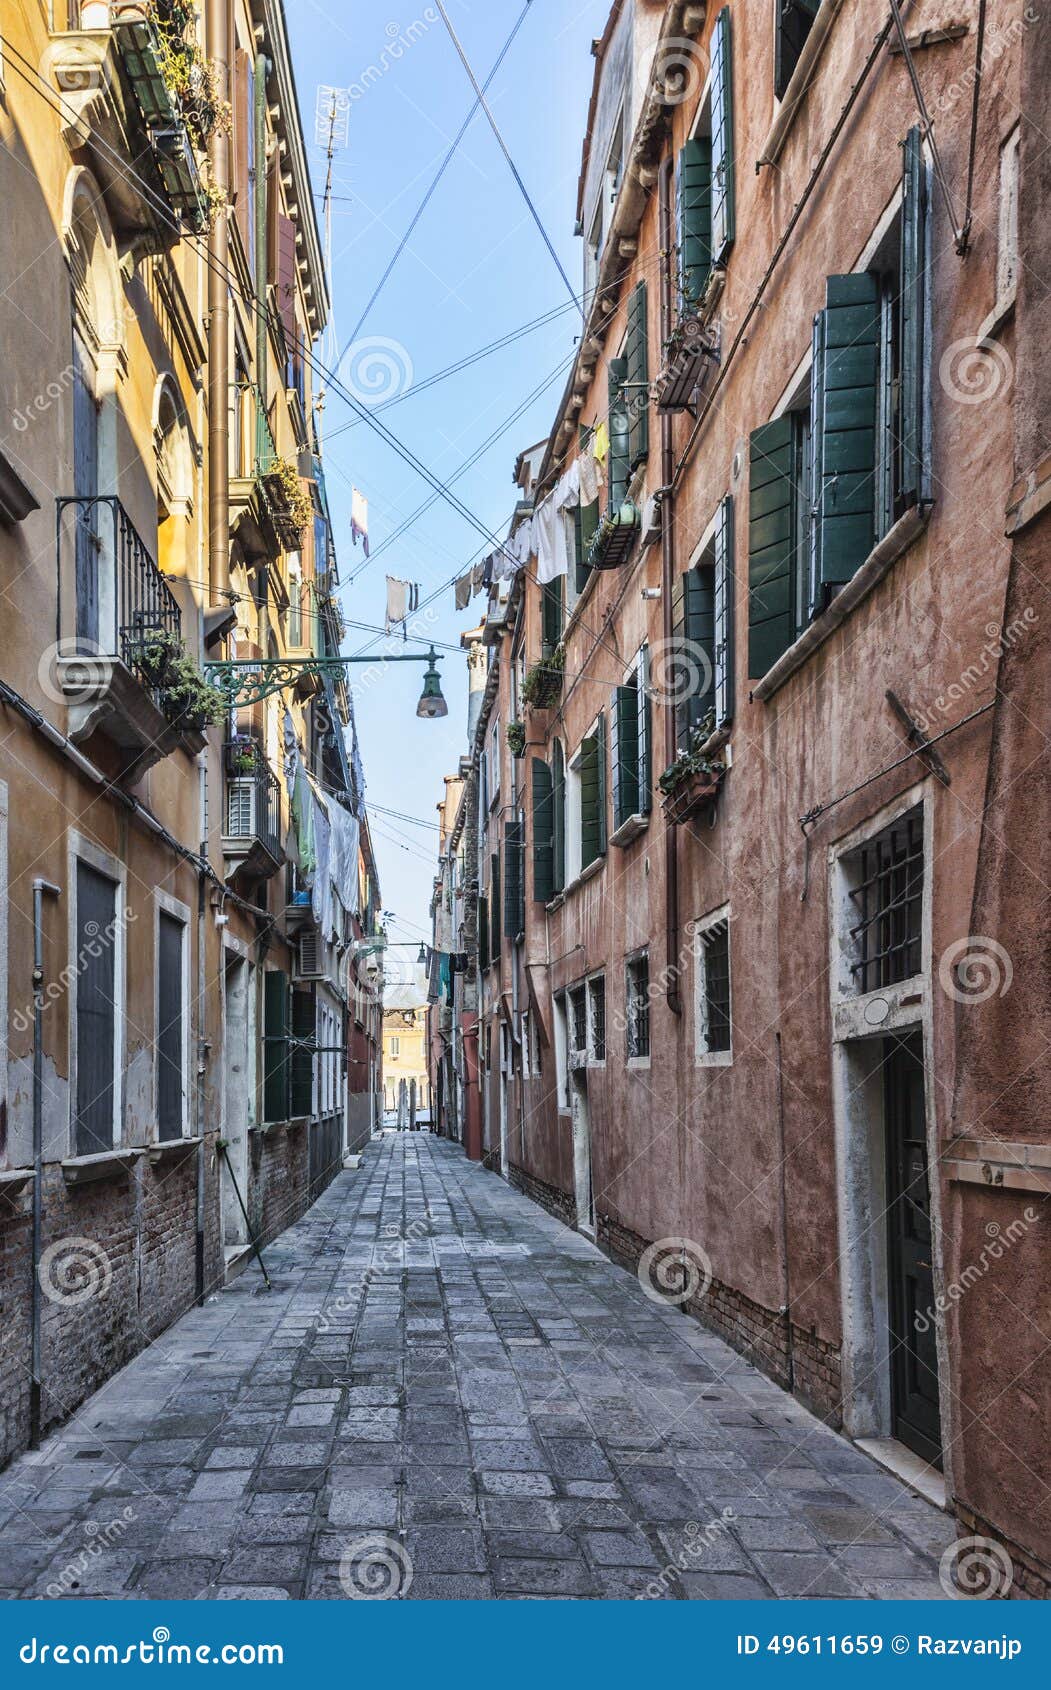 narrow venetian street